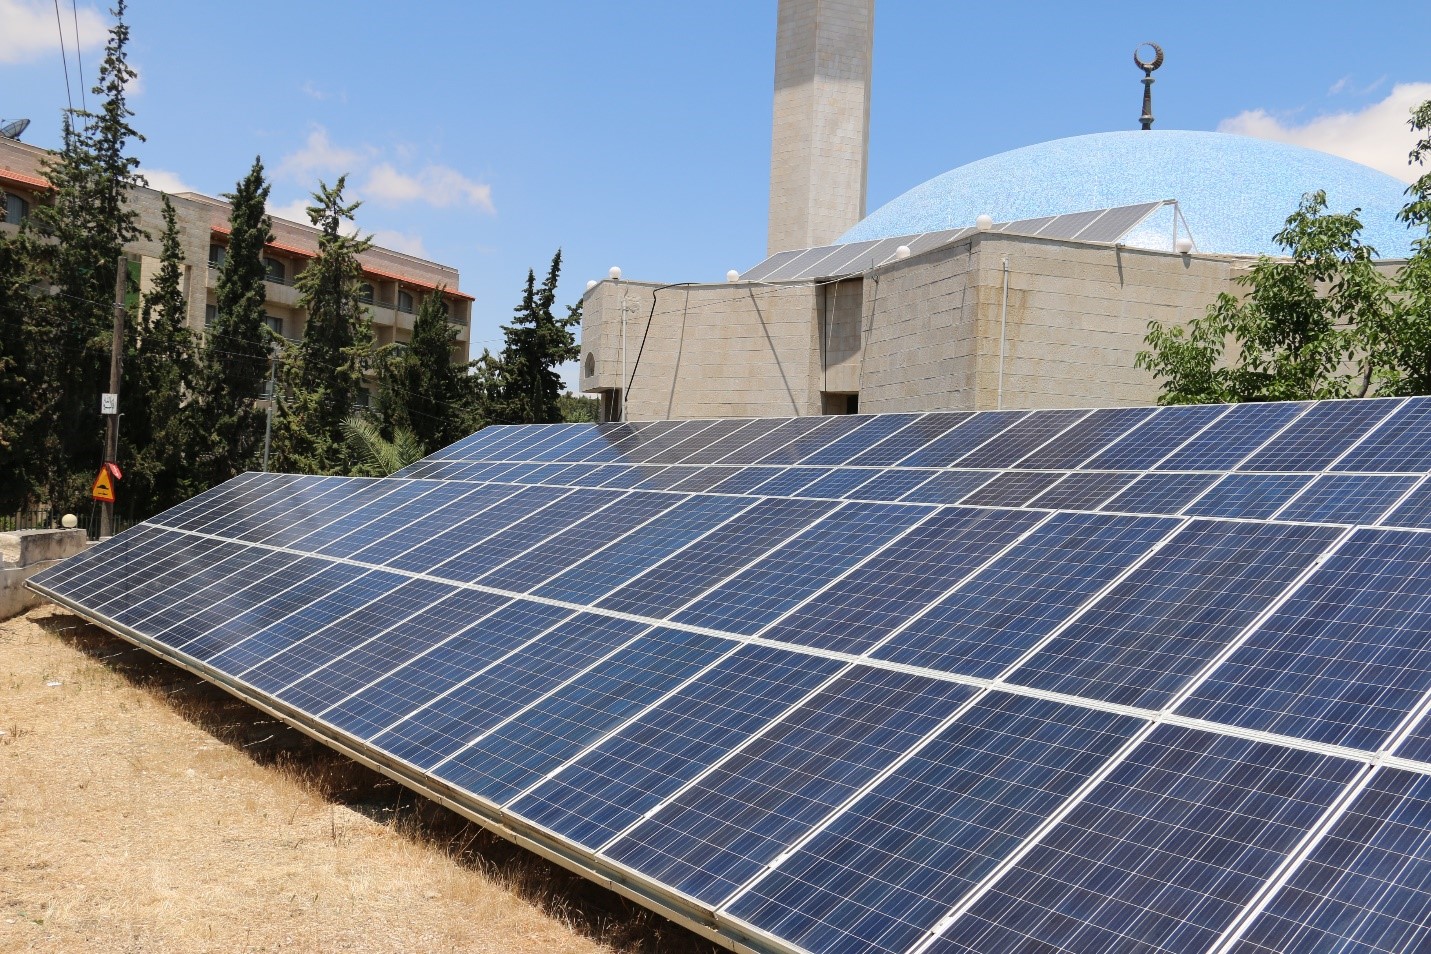 Renewable Energy - Commercial & Industrial Projects in Jordan